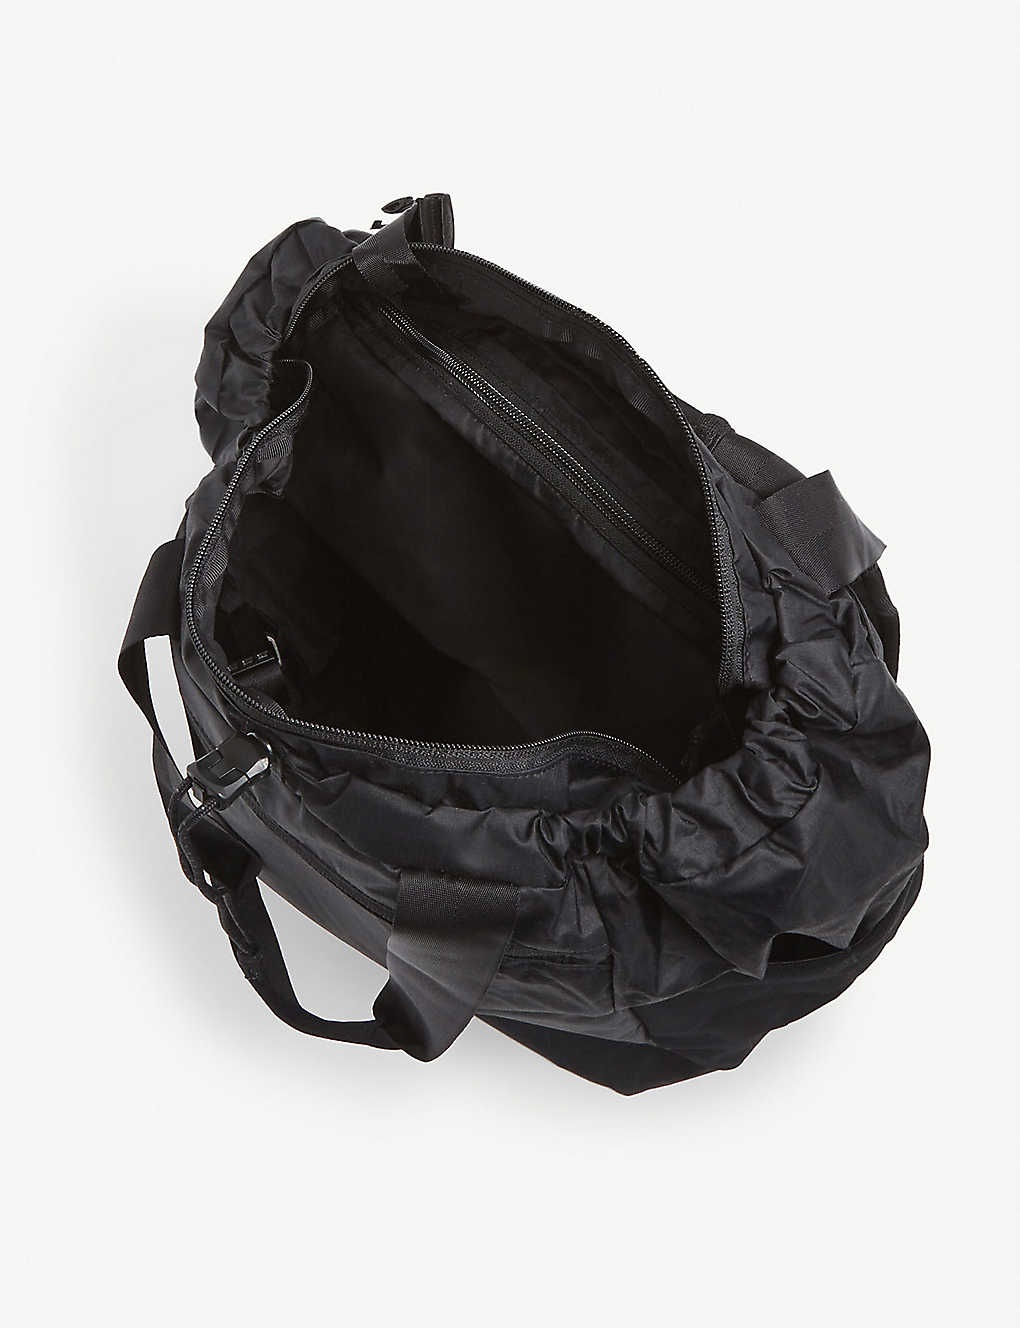 Ultralight Black Hole recycled nylon tote bag - 4